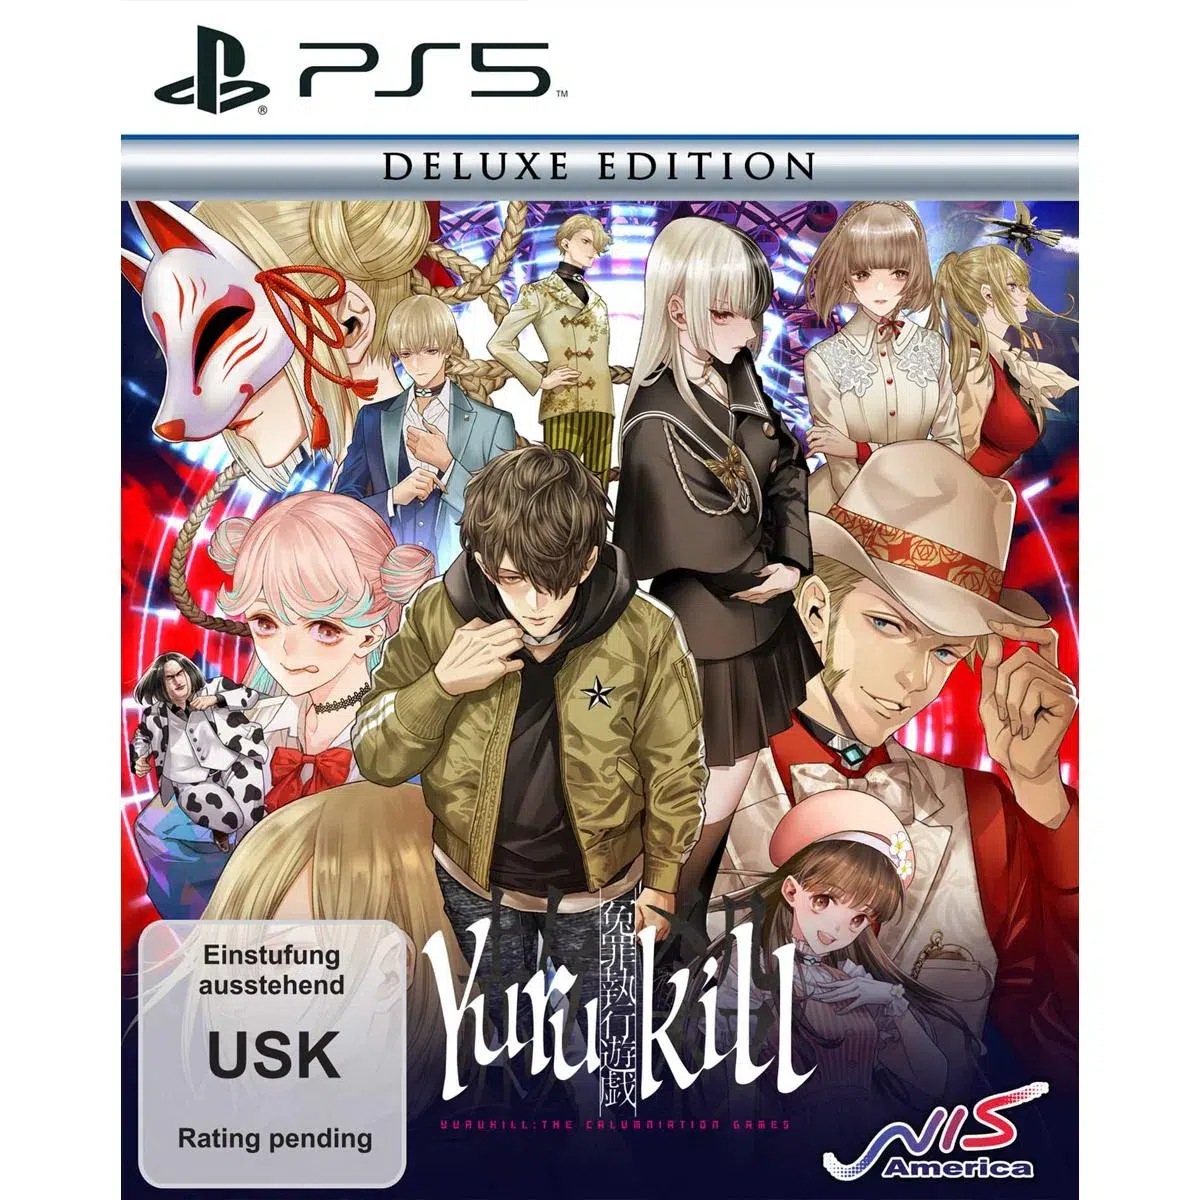 Yurukill: The Calumniation Games - Deluxe Edition (PS5)